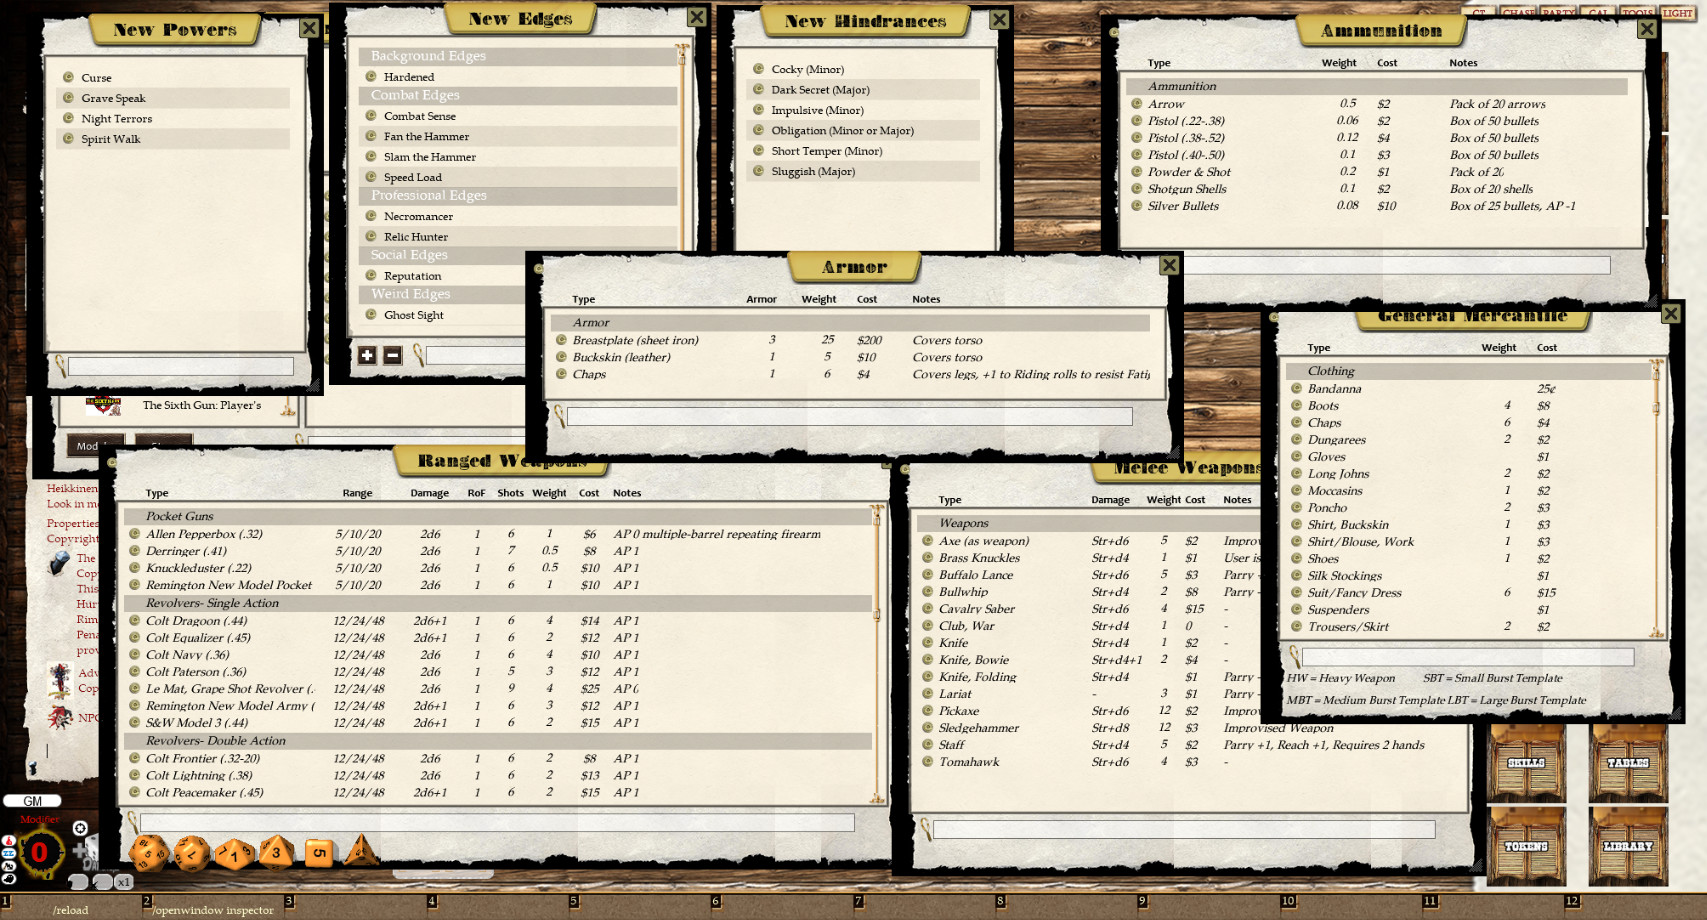 Fantasy Grounds - The Sixth Gun Roleplaying Game (Savage Worlds) screenshot